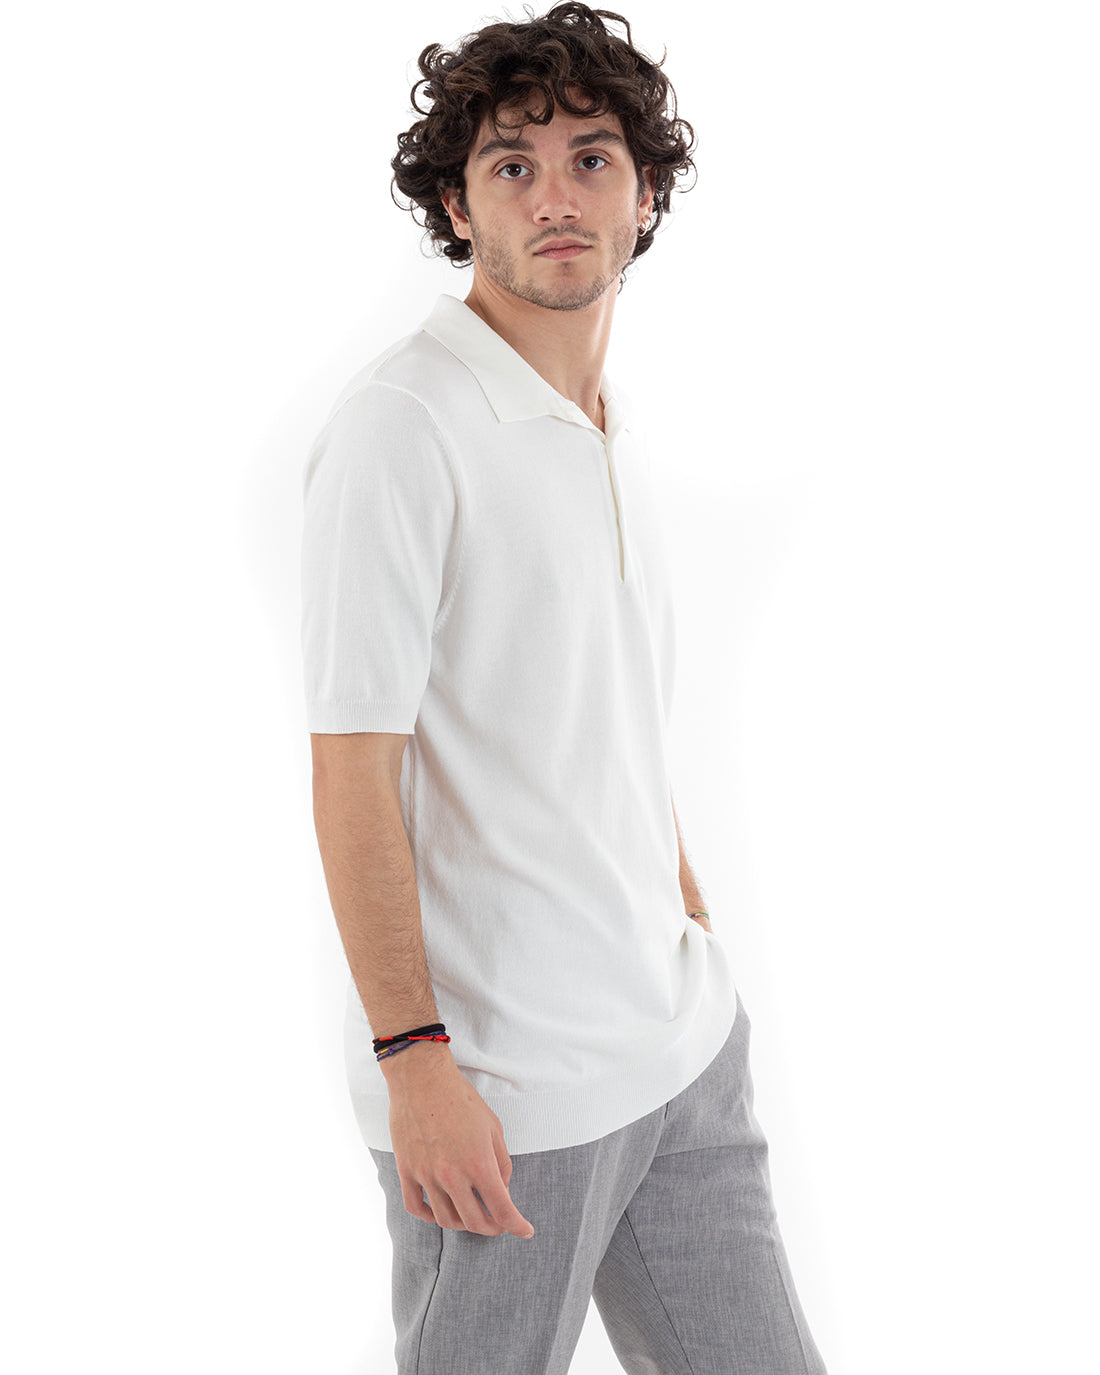 Polo T-Shirt Uomo Manica Corta Tinta Unita Bianca Filo Casual GIOSAL-TS2788A